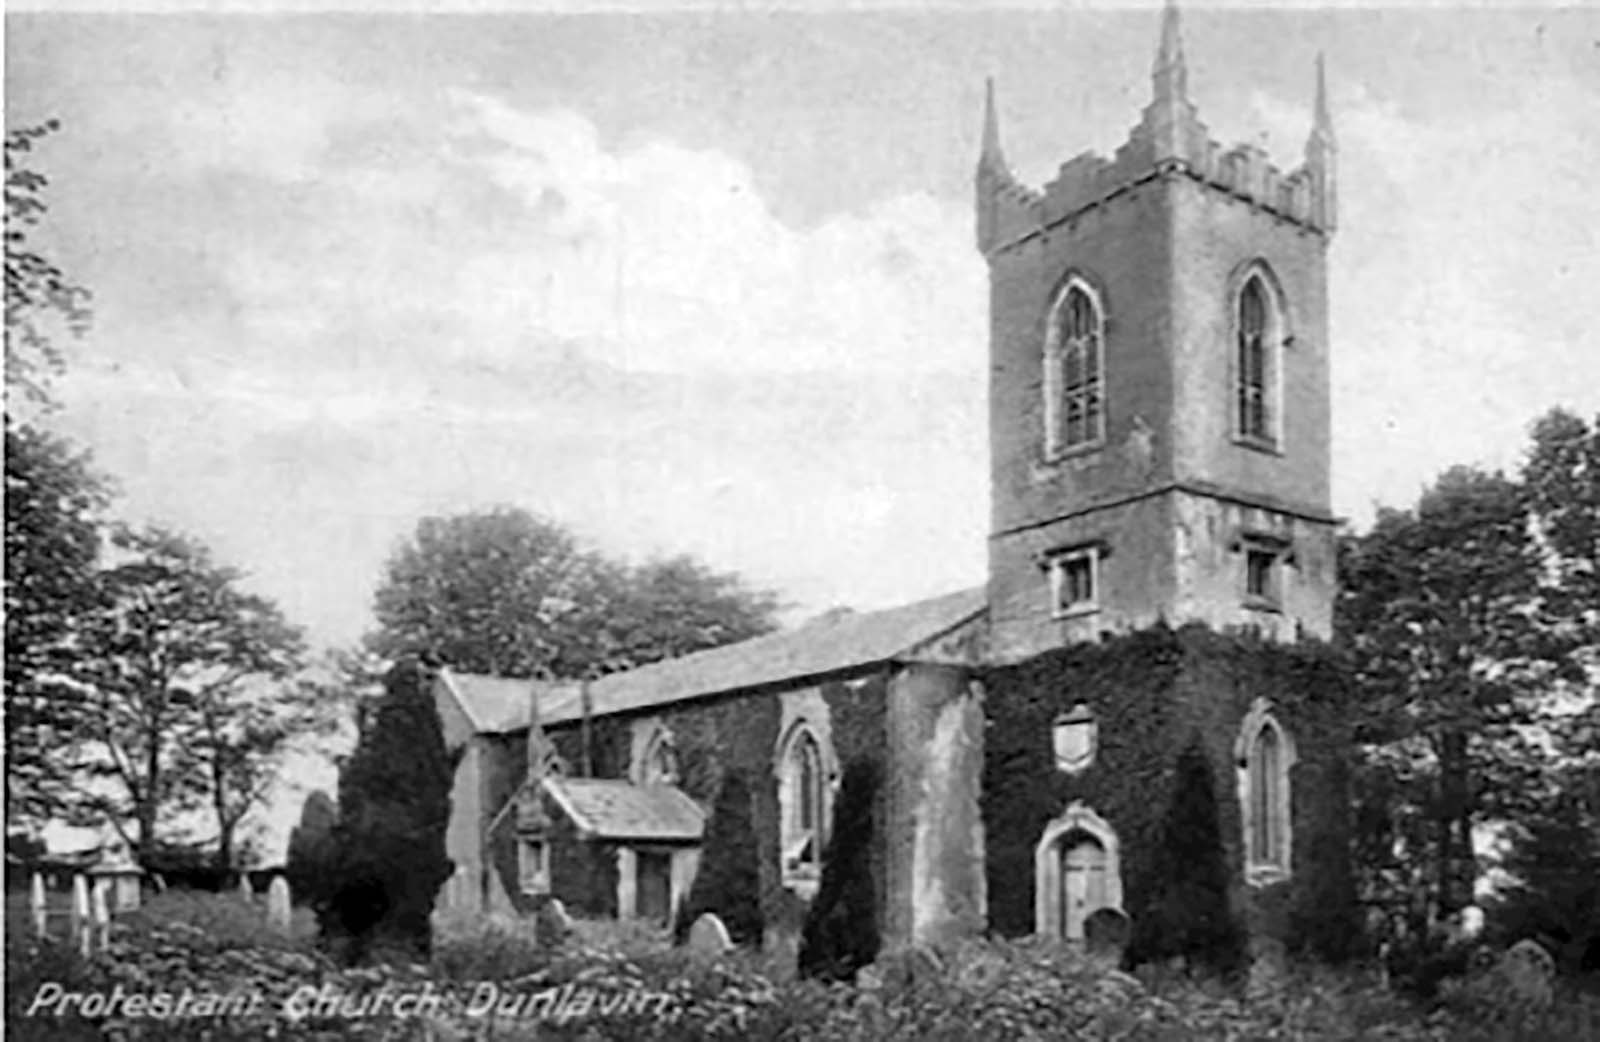 Parish Church of St. Nicholas (Church of Ireland), Dunlavin, Co. Wicklow